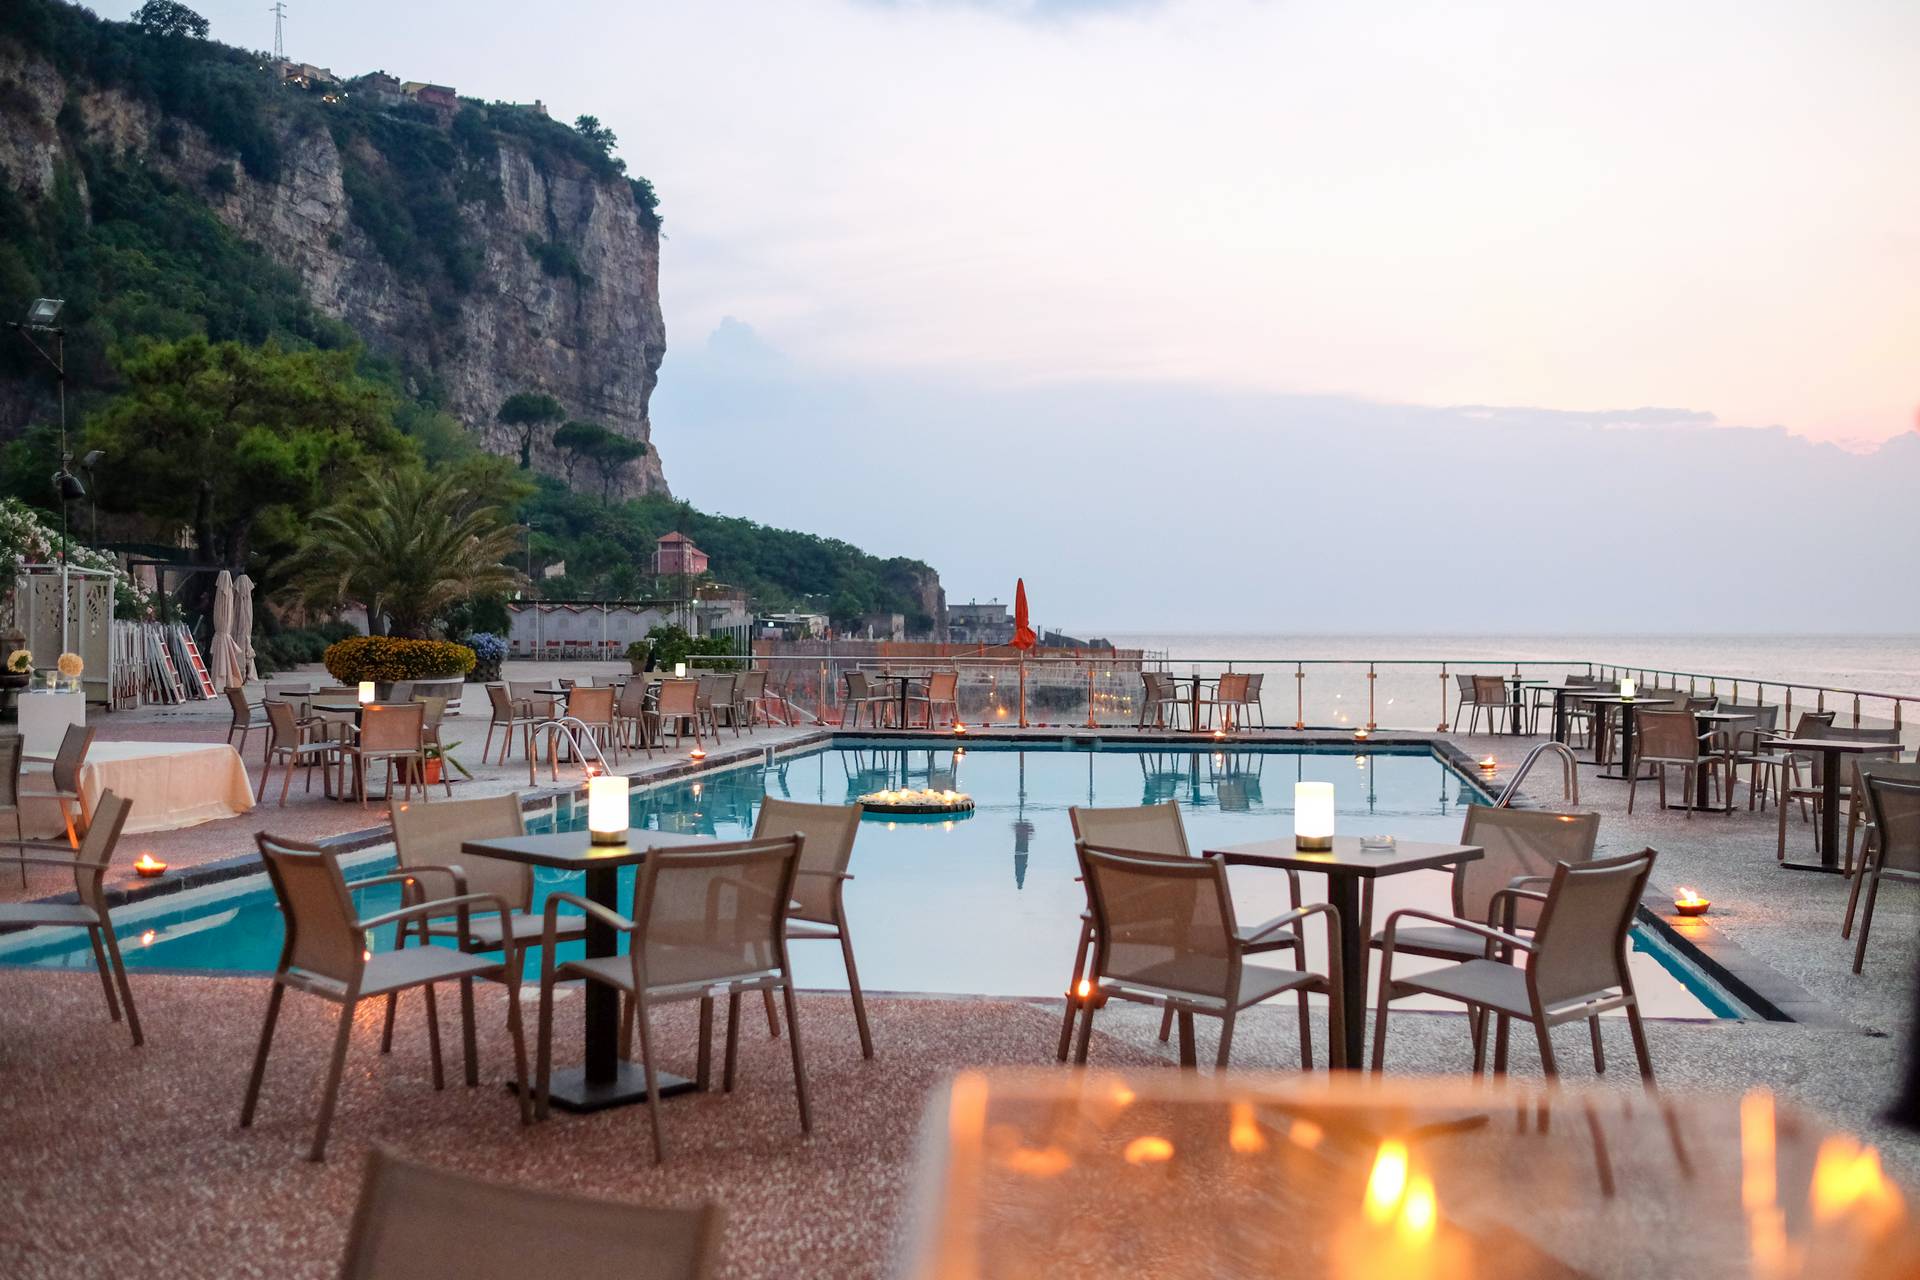 Le-Axidie-Resort-Hotel-Rooms-Sorrento-Coast-Vico-Equense-Wedding-Matrimonio-pineta-piscina-07